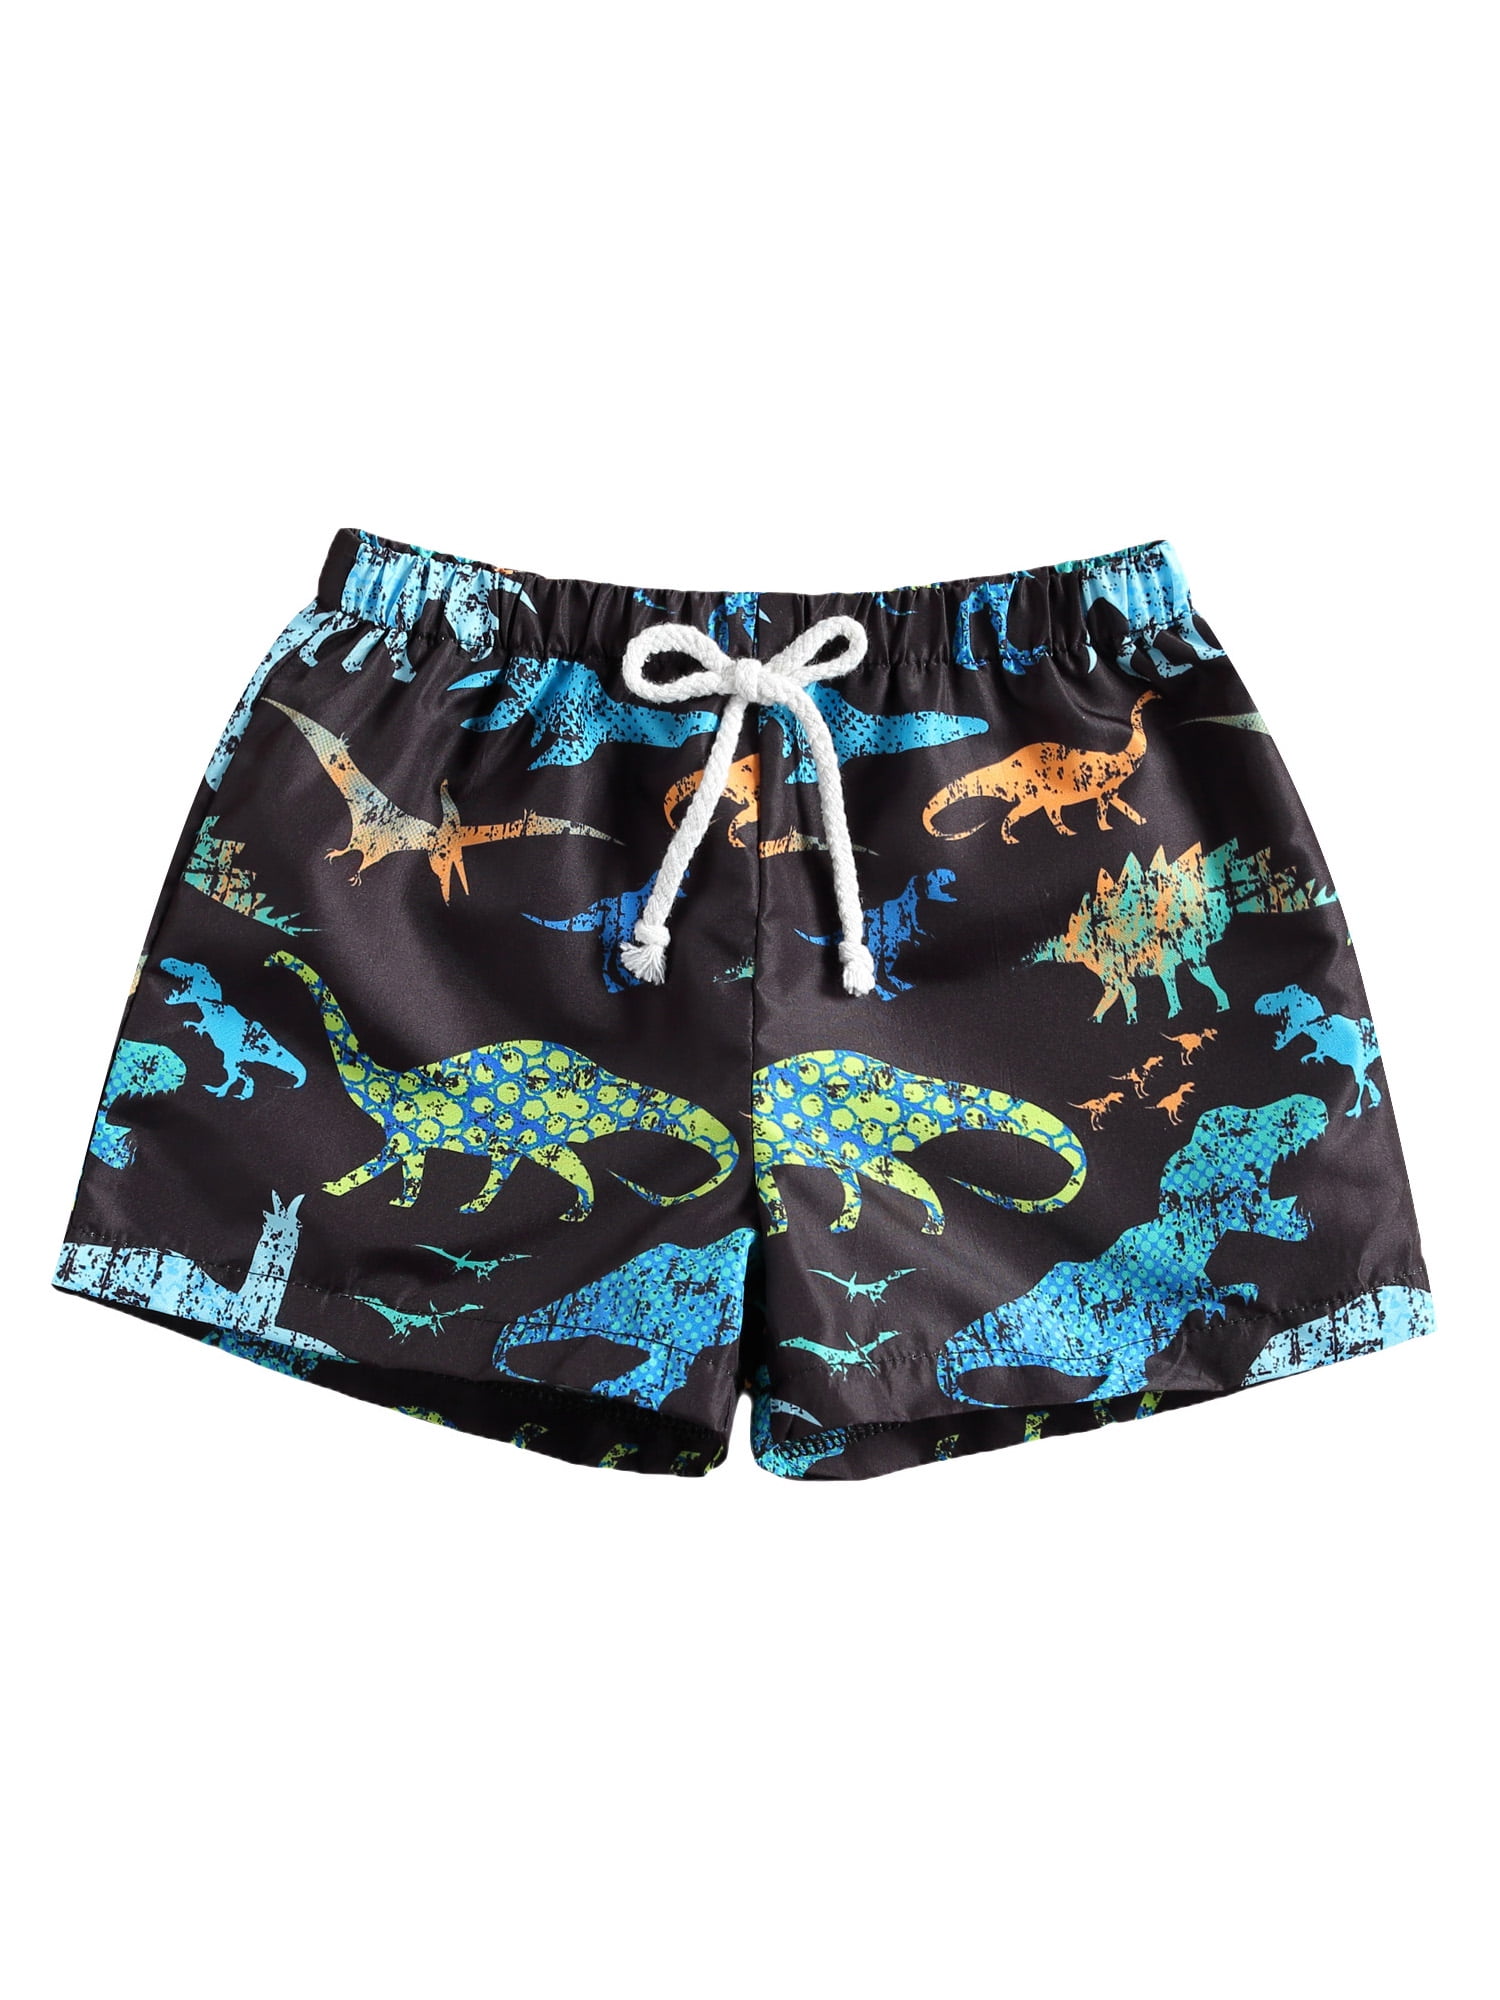 Hirigin Little Boys Beach Shorts Swim Trunk Quick Dry Summer Casual ...